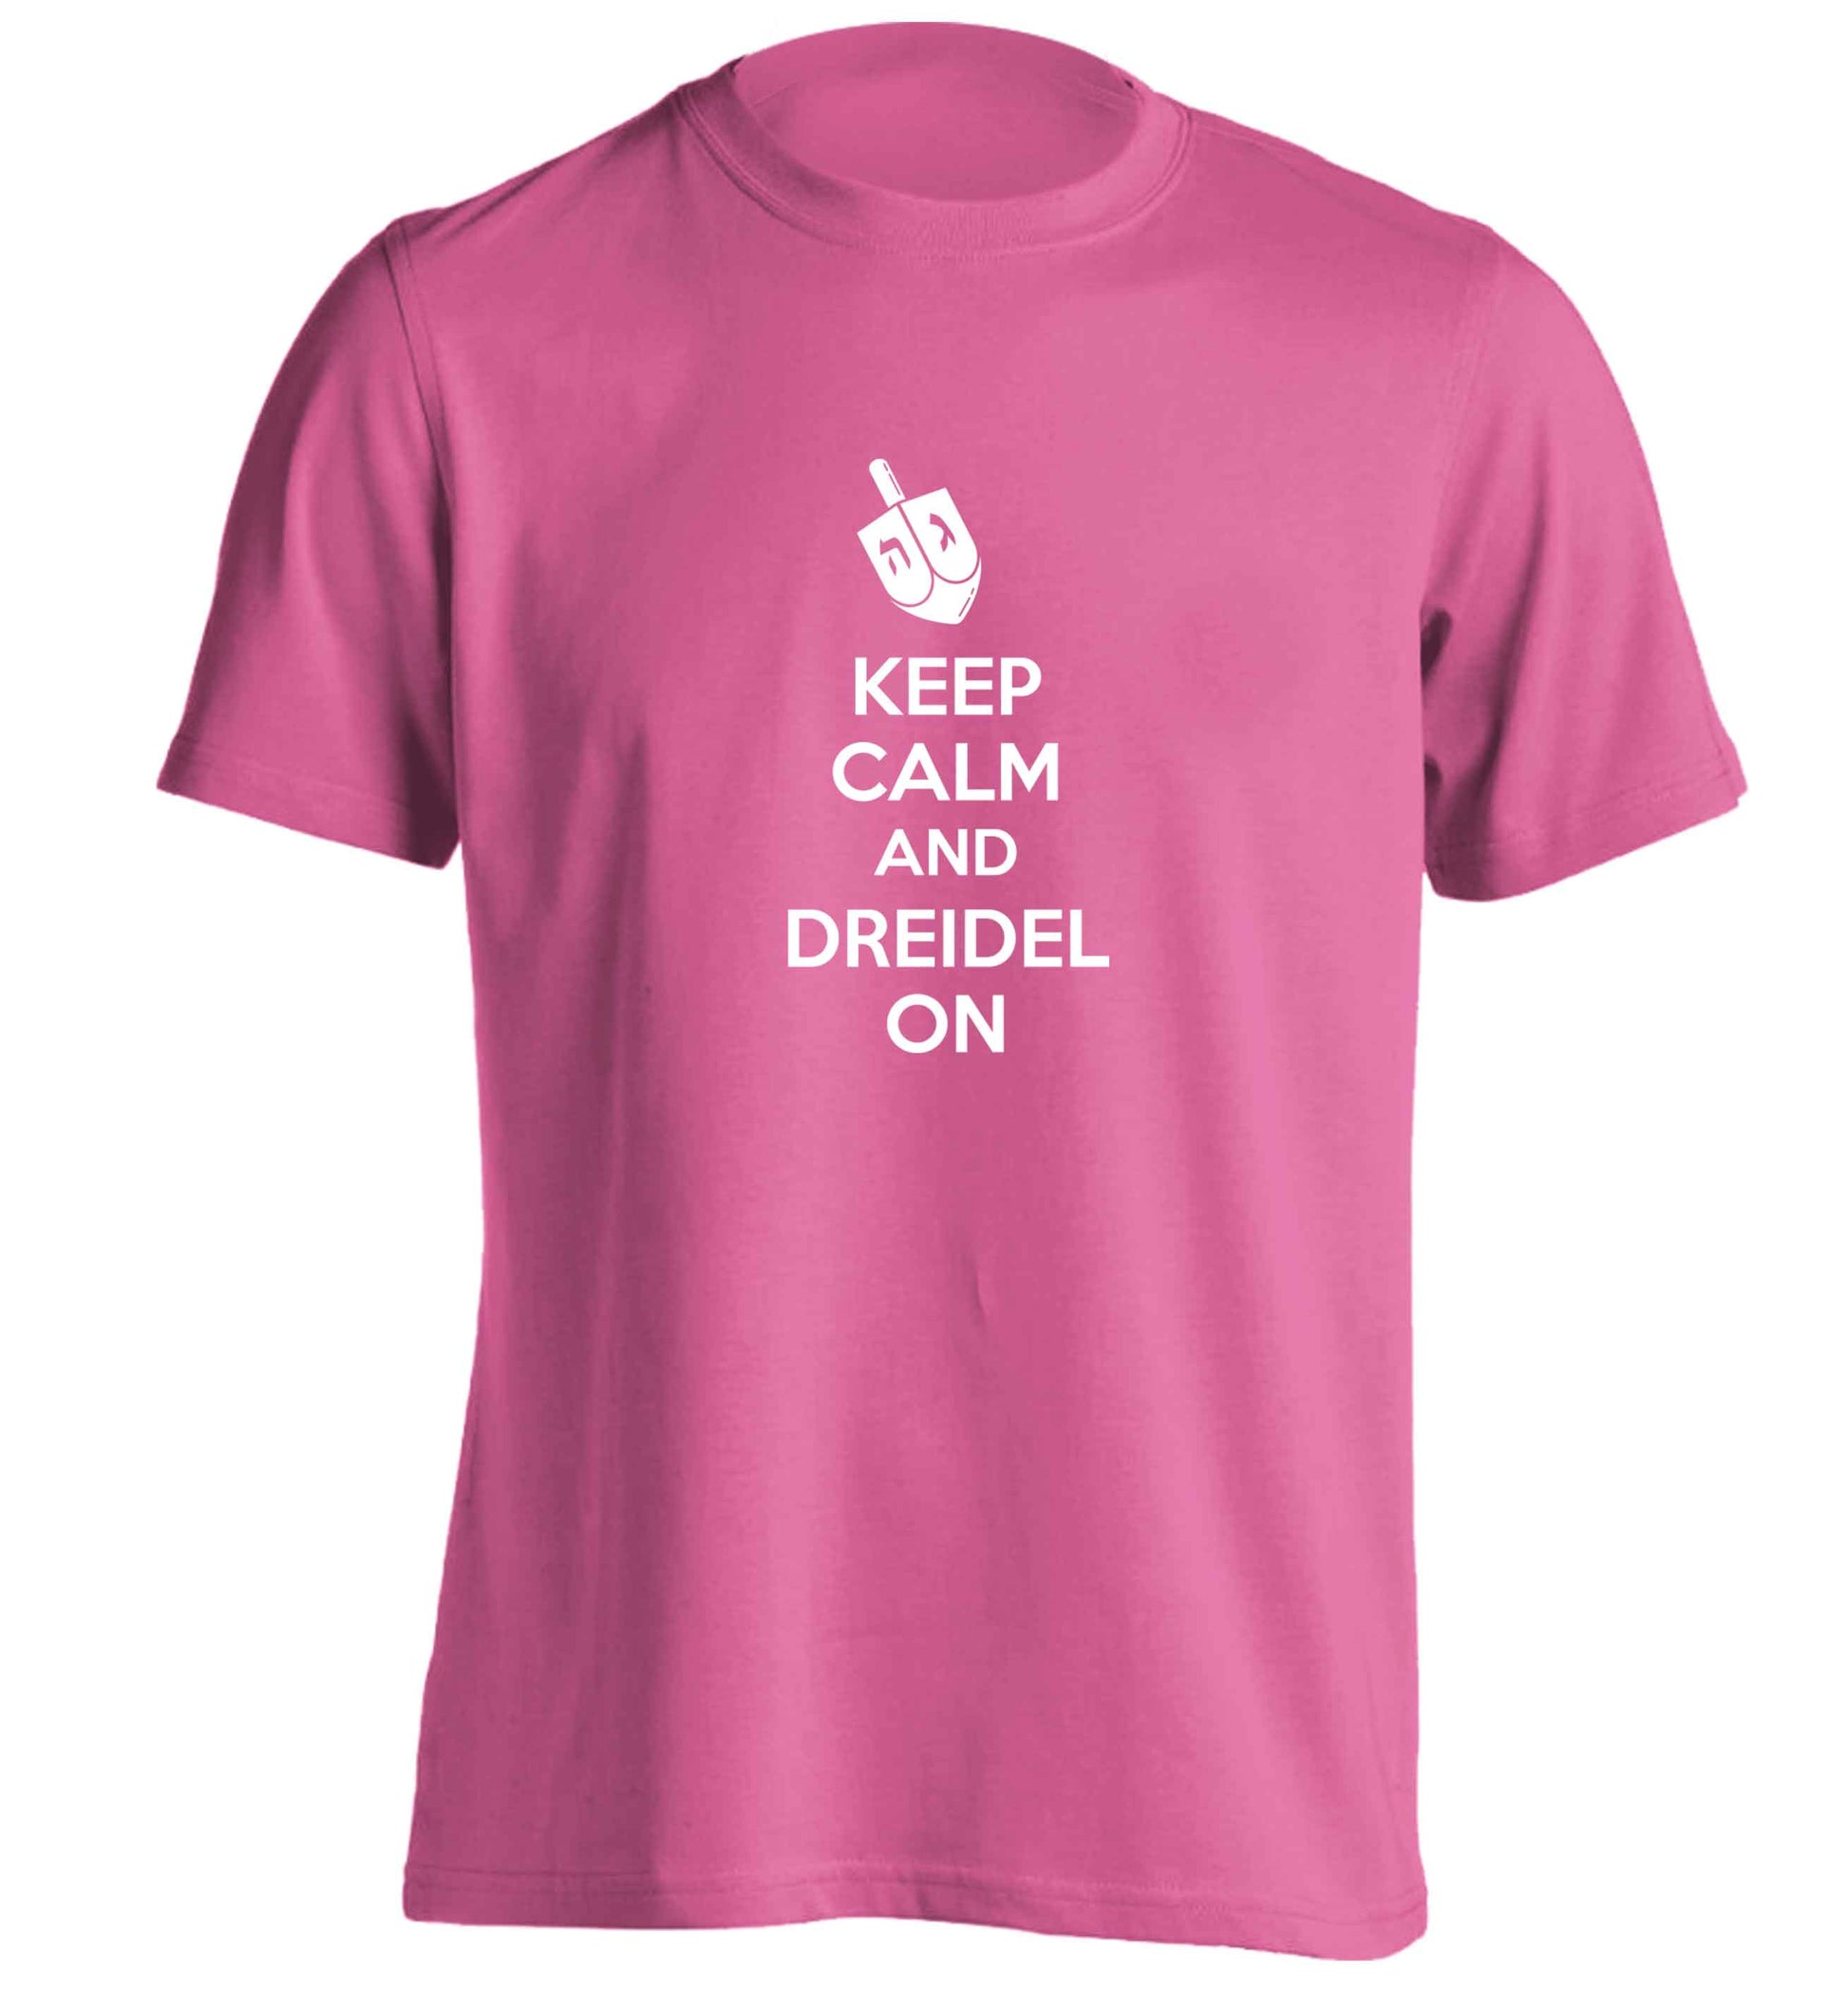 Keep calm and dreidel on adults unisex pink Tshirt 2XL